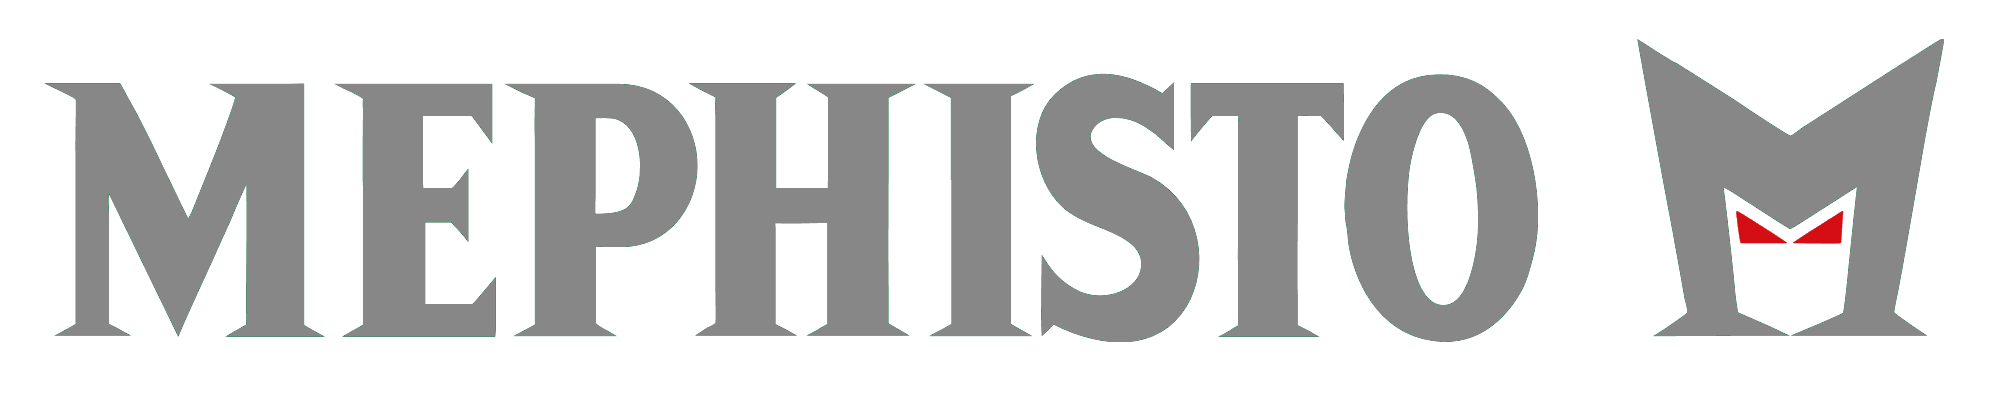 Mephisto logo, logotype